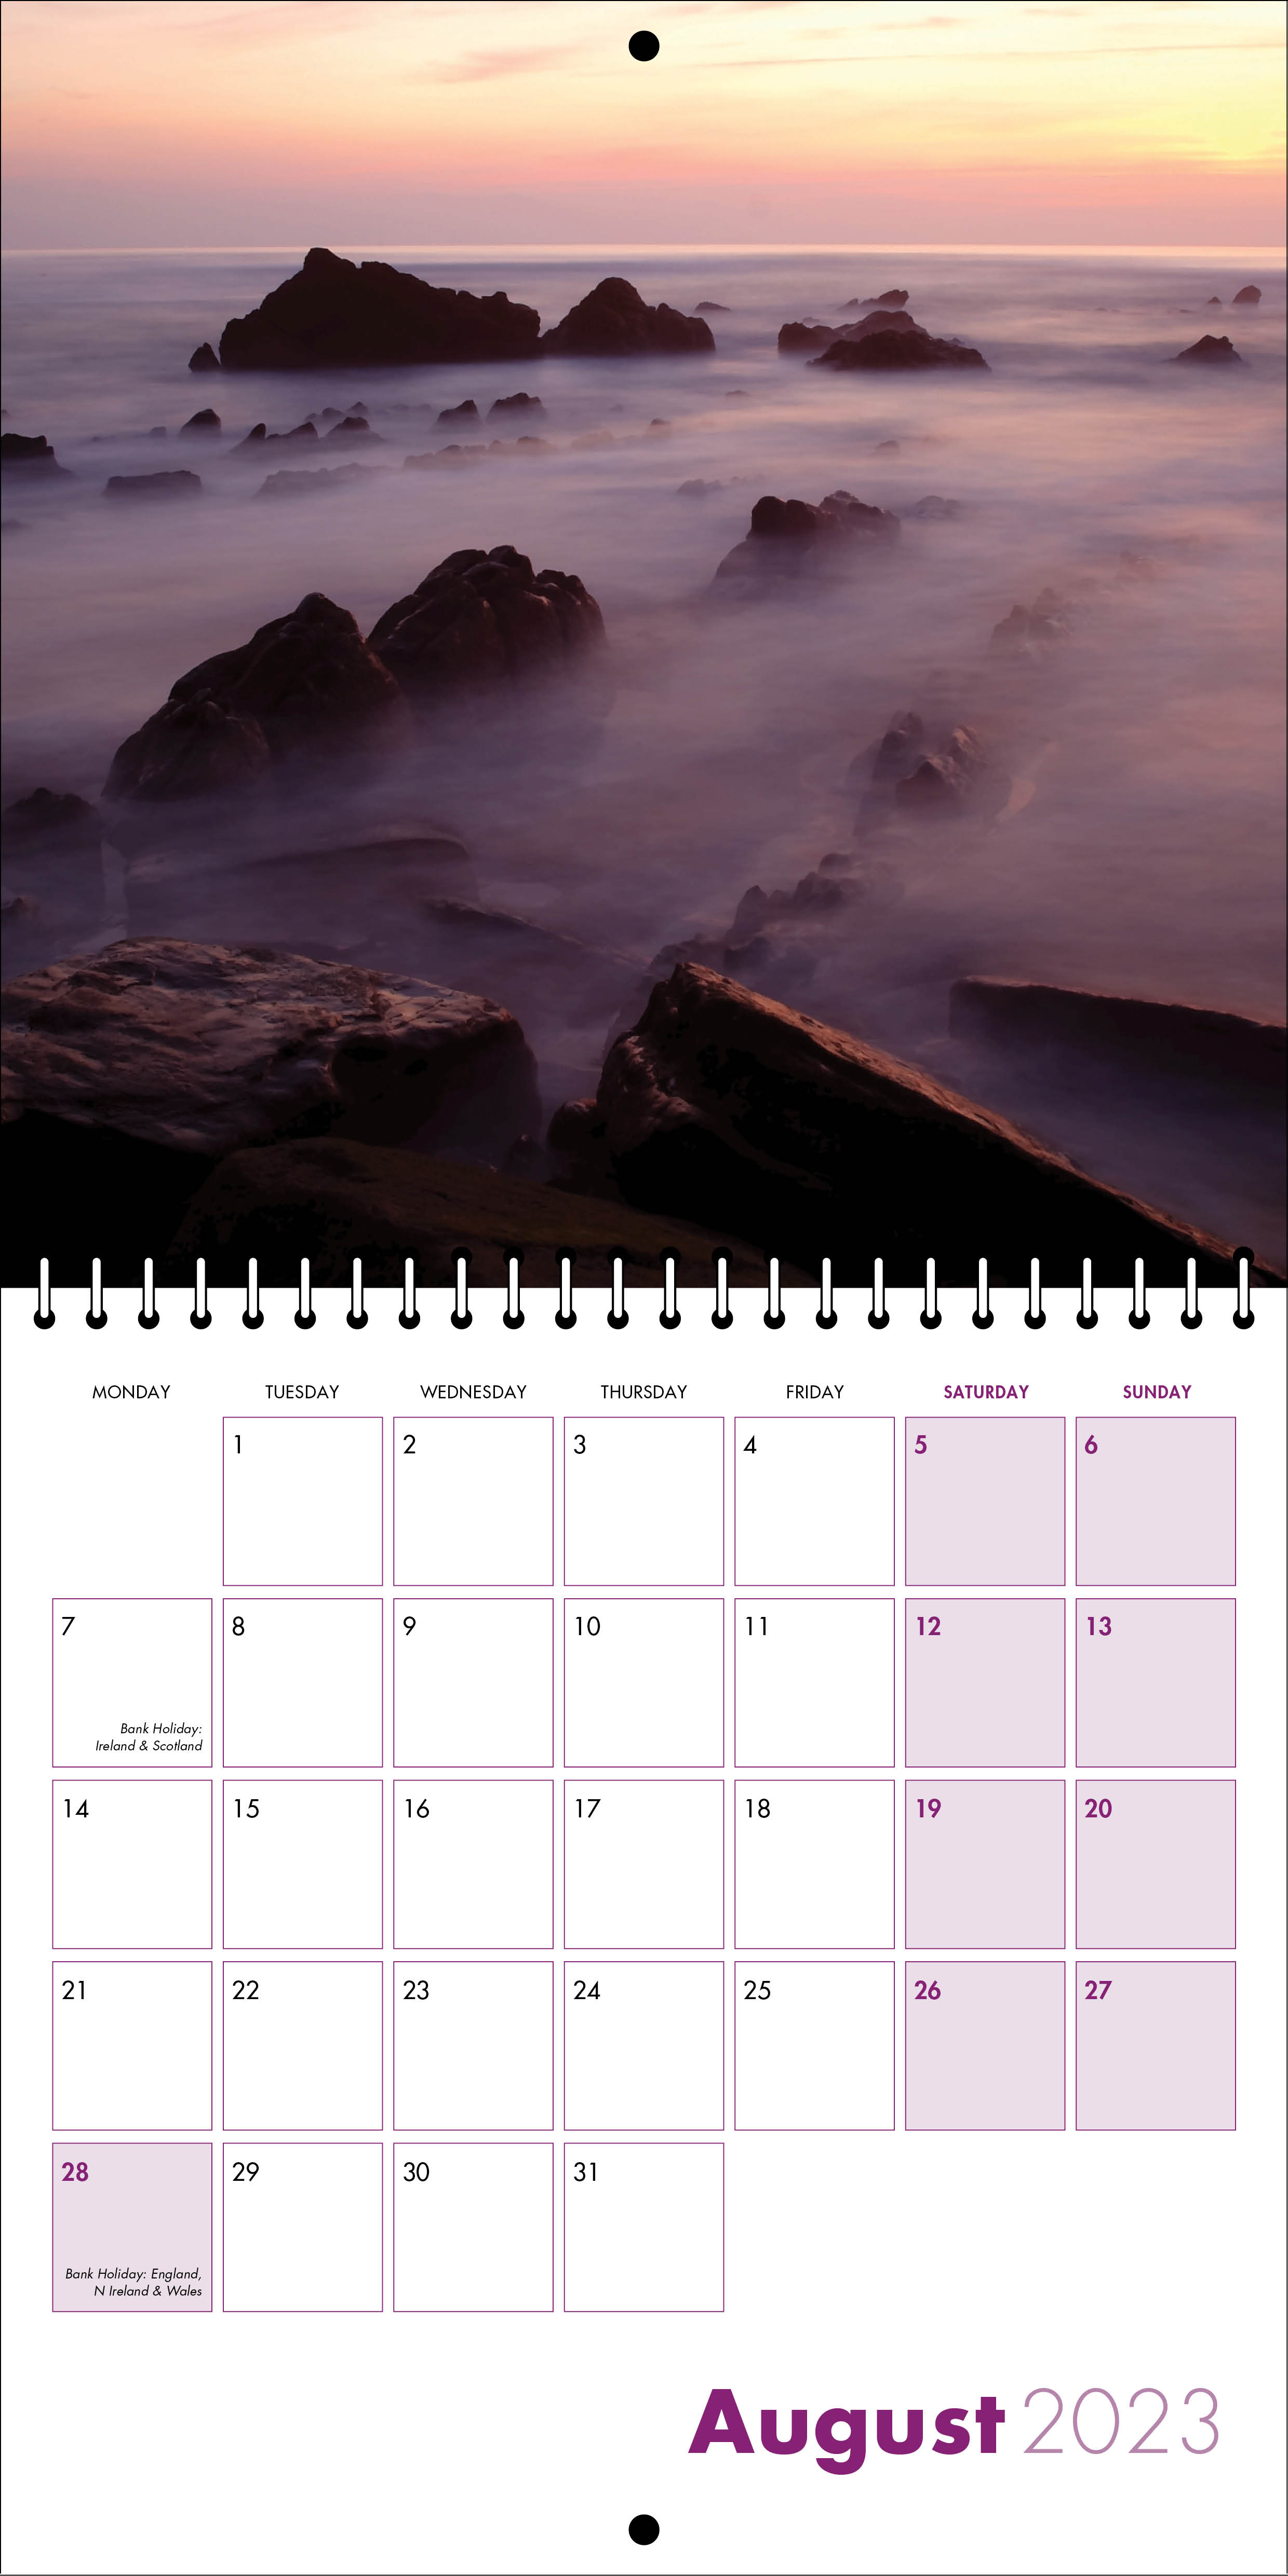 Picture of Square Spiral Booklet Calendar QF02 Purple